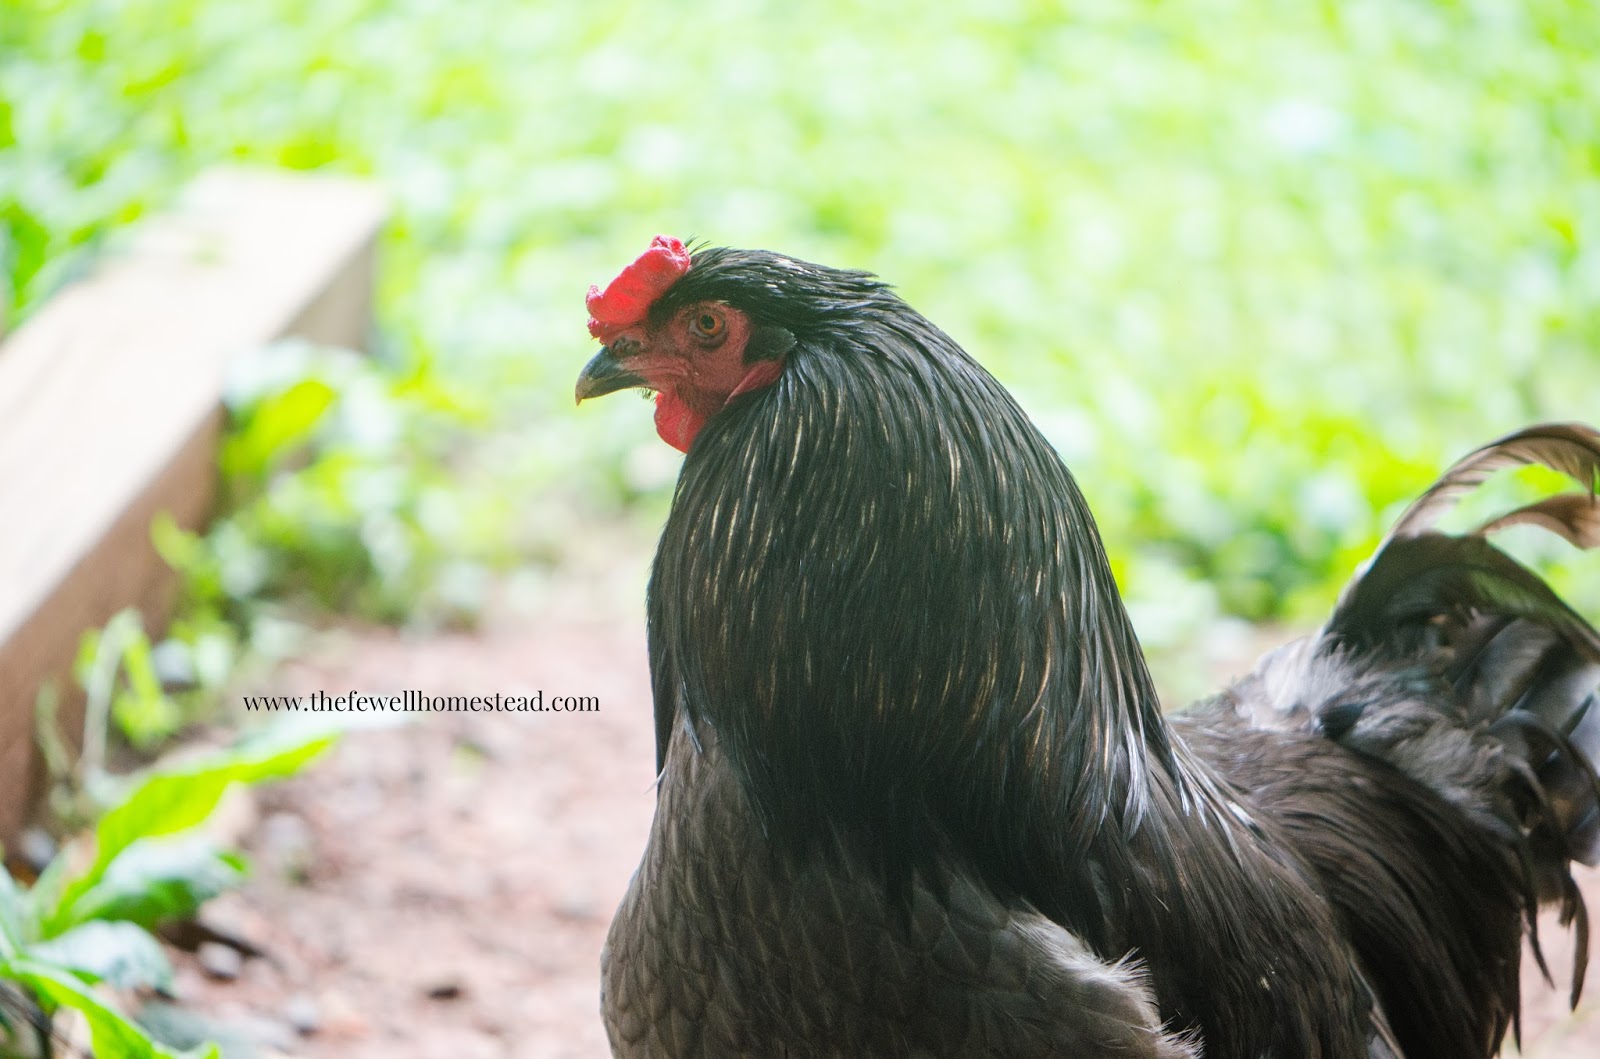 Black hen with green grassy background | chicken bare back